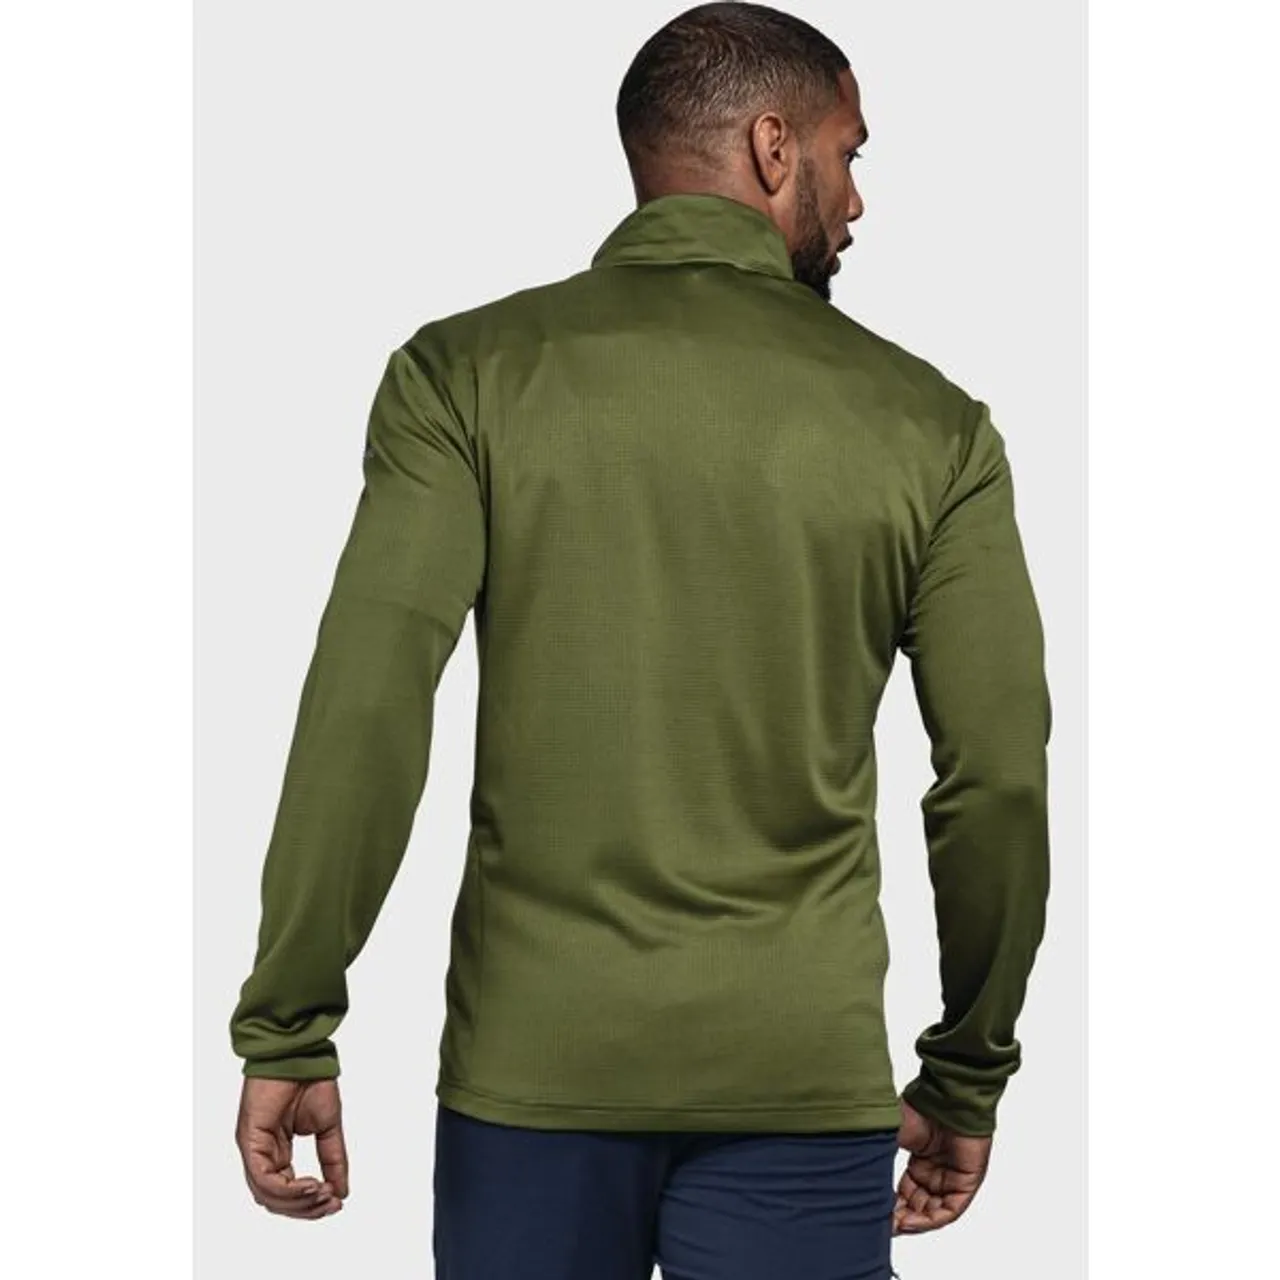 Strickfleece-Pullover SCHÖFFEL "CIRC Fleece Looop M" Gr. 50, grün (6737, grün) Herren Pullover Herren-Outdoorbekleidung